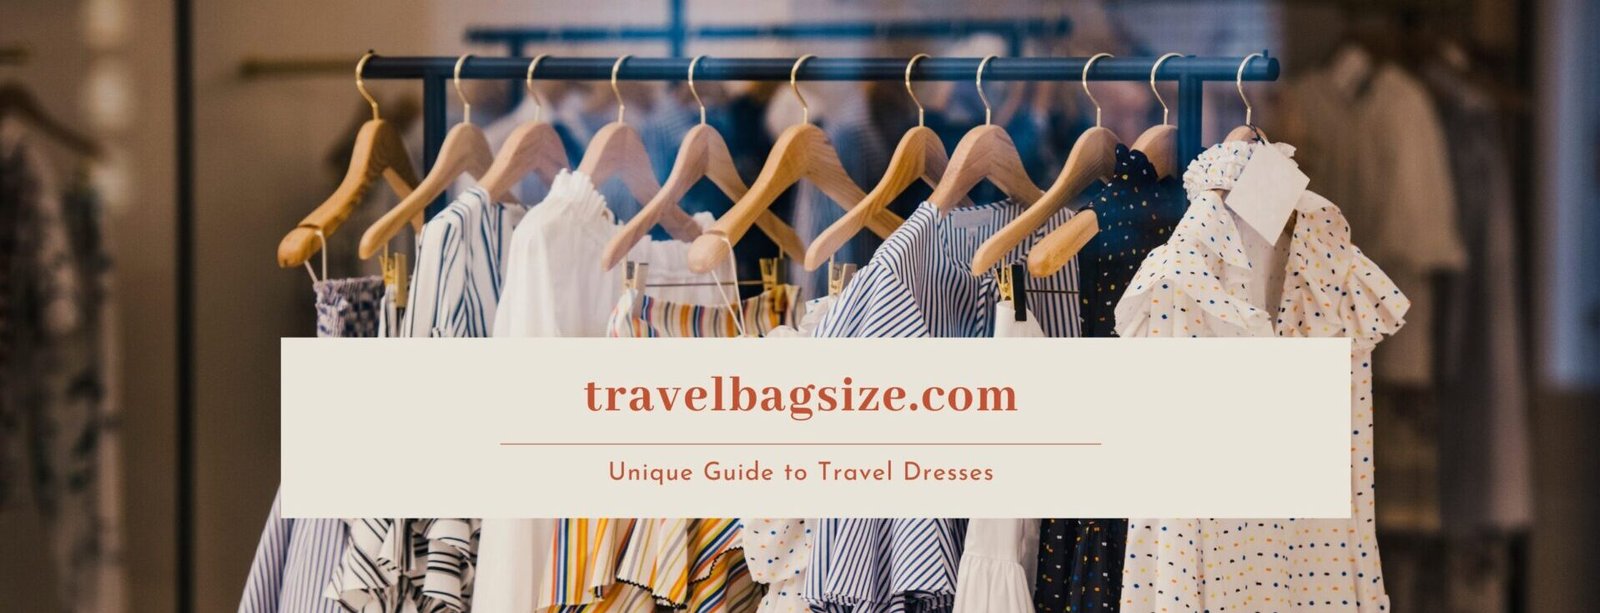 Travel dresses